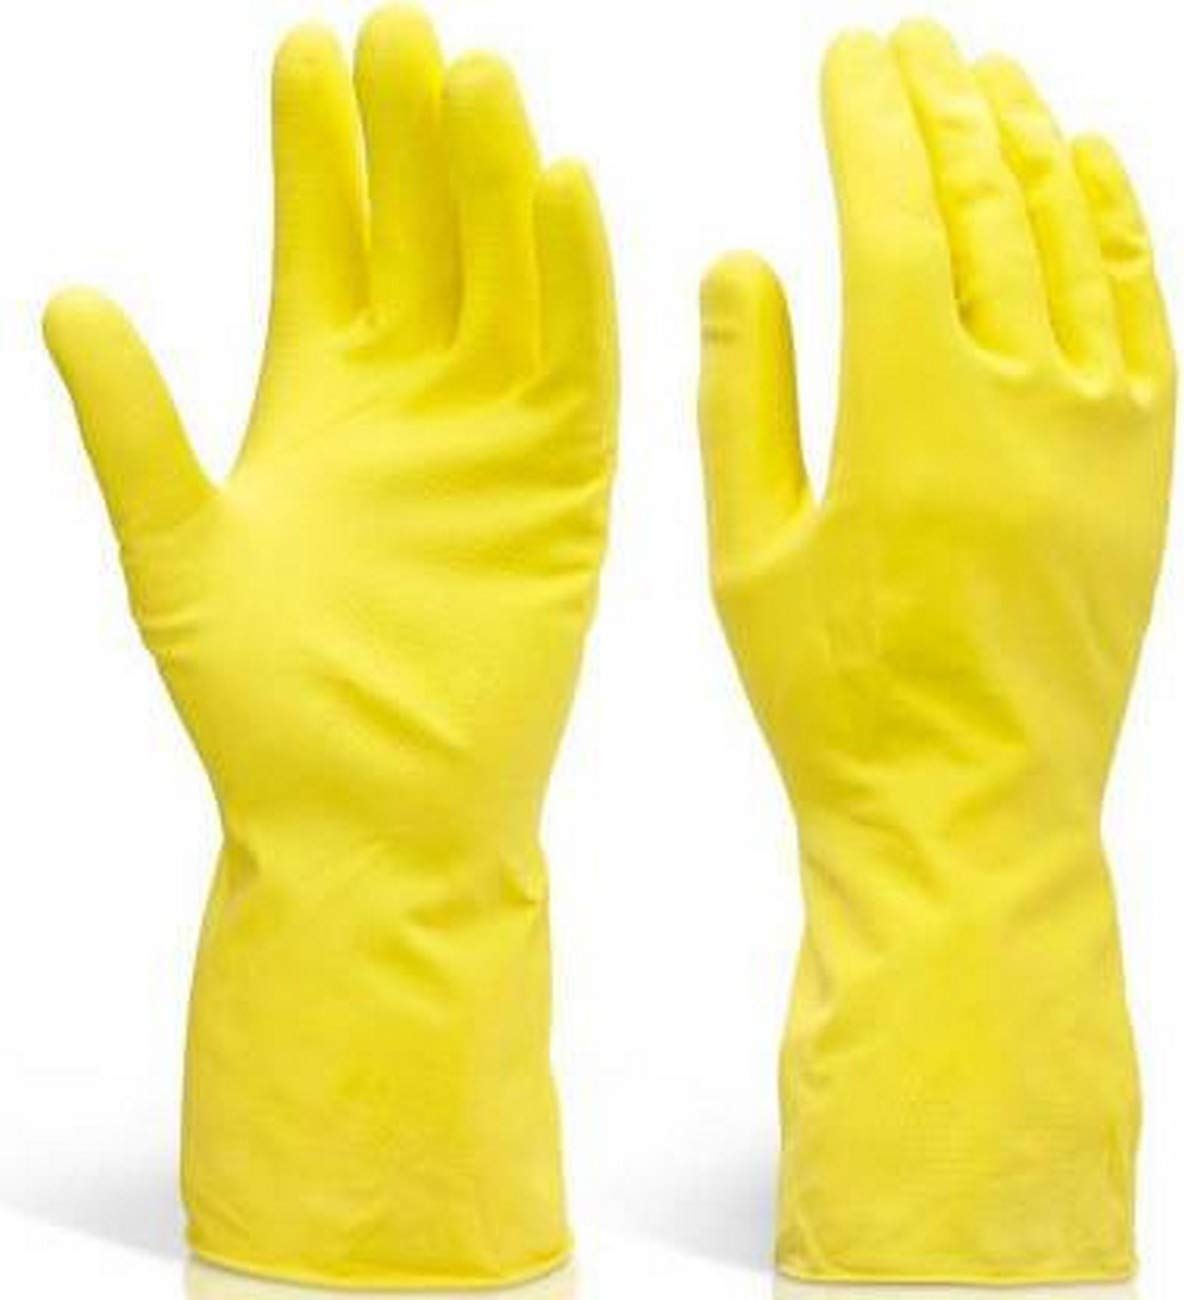 Rubber Hand Gloves Non-Slip Yellow